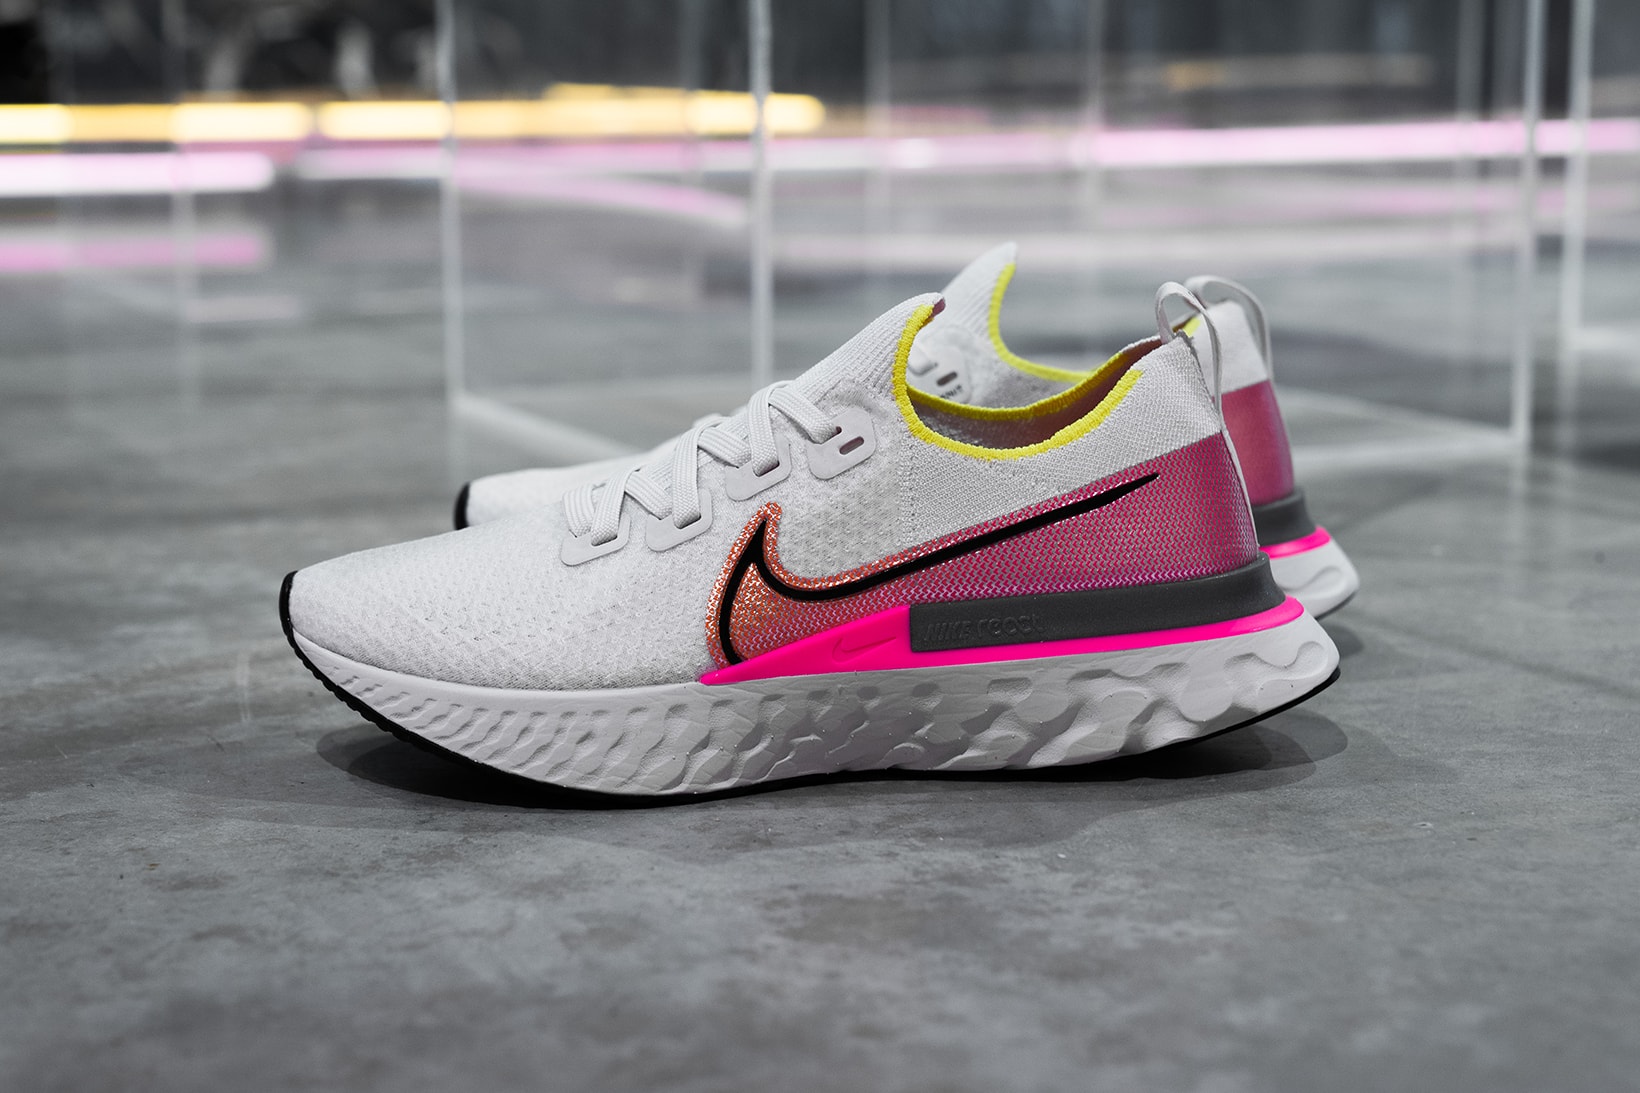 nike react infinity run sneakers white pink neon yellow shoes footwear sneakerhead